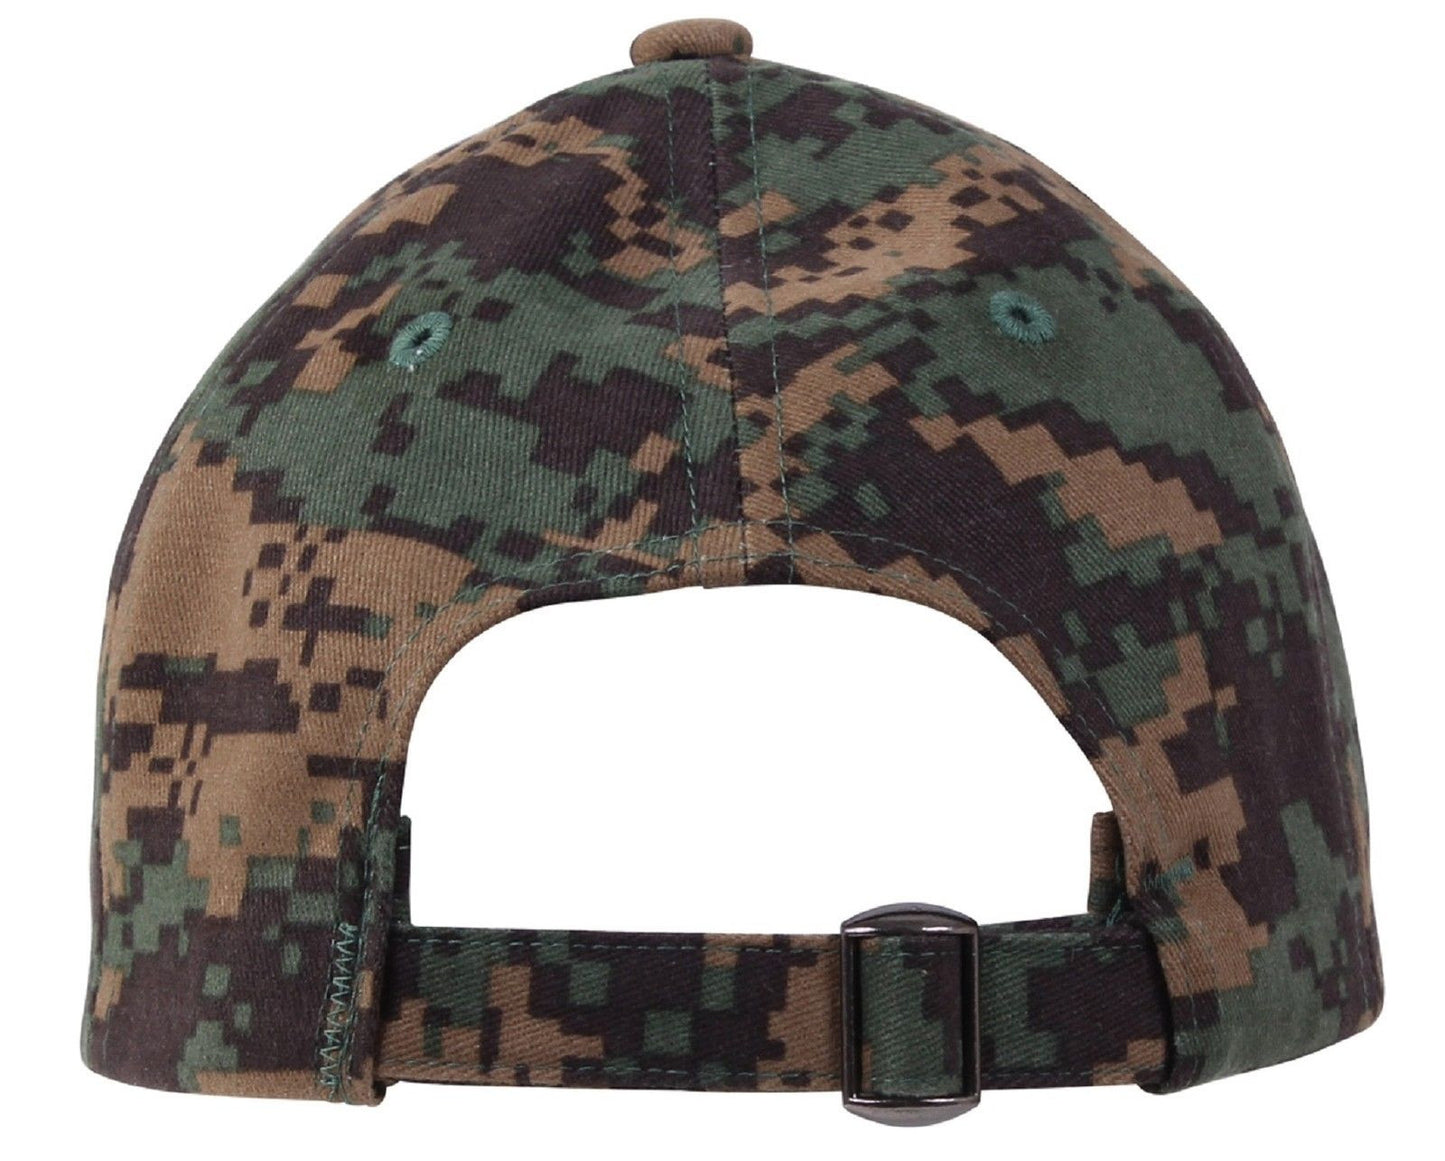 Kids Adjustable Woodland & Digital Camouflage Baseball Cap Hat Boys Low Profile